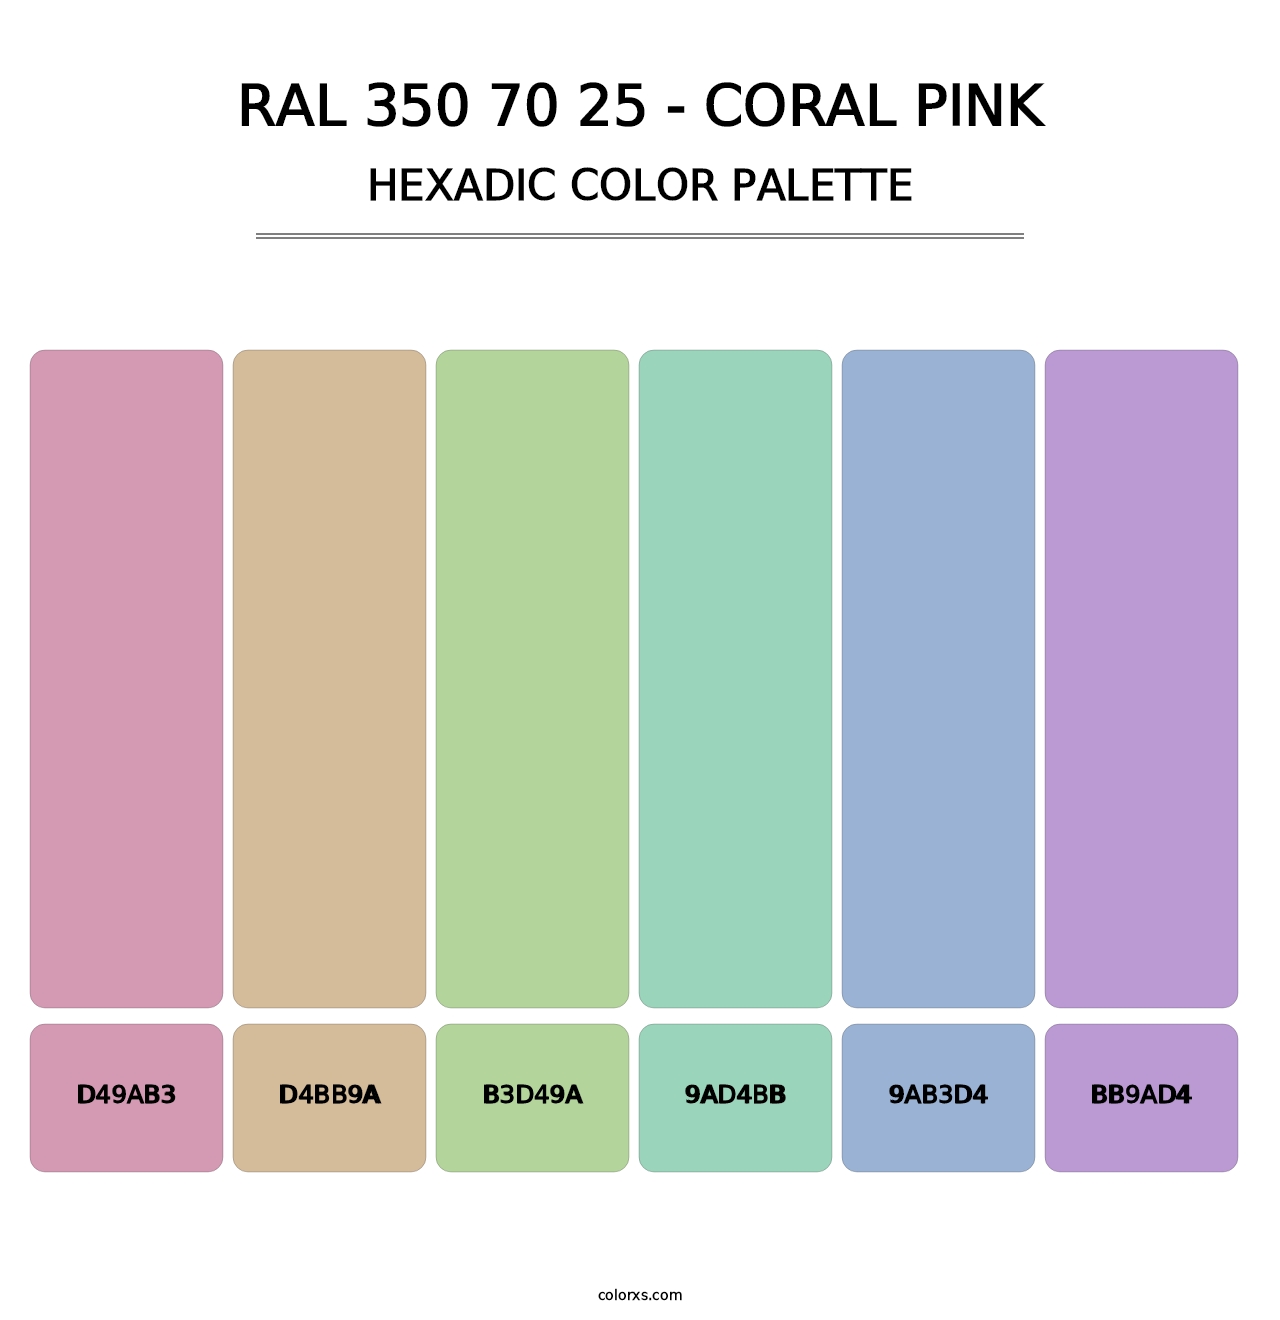 RAL 350 70 25 - Coral Pink - Hexadic Color Palette